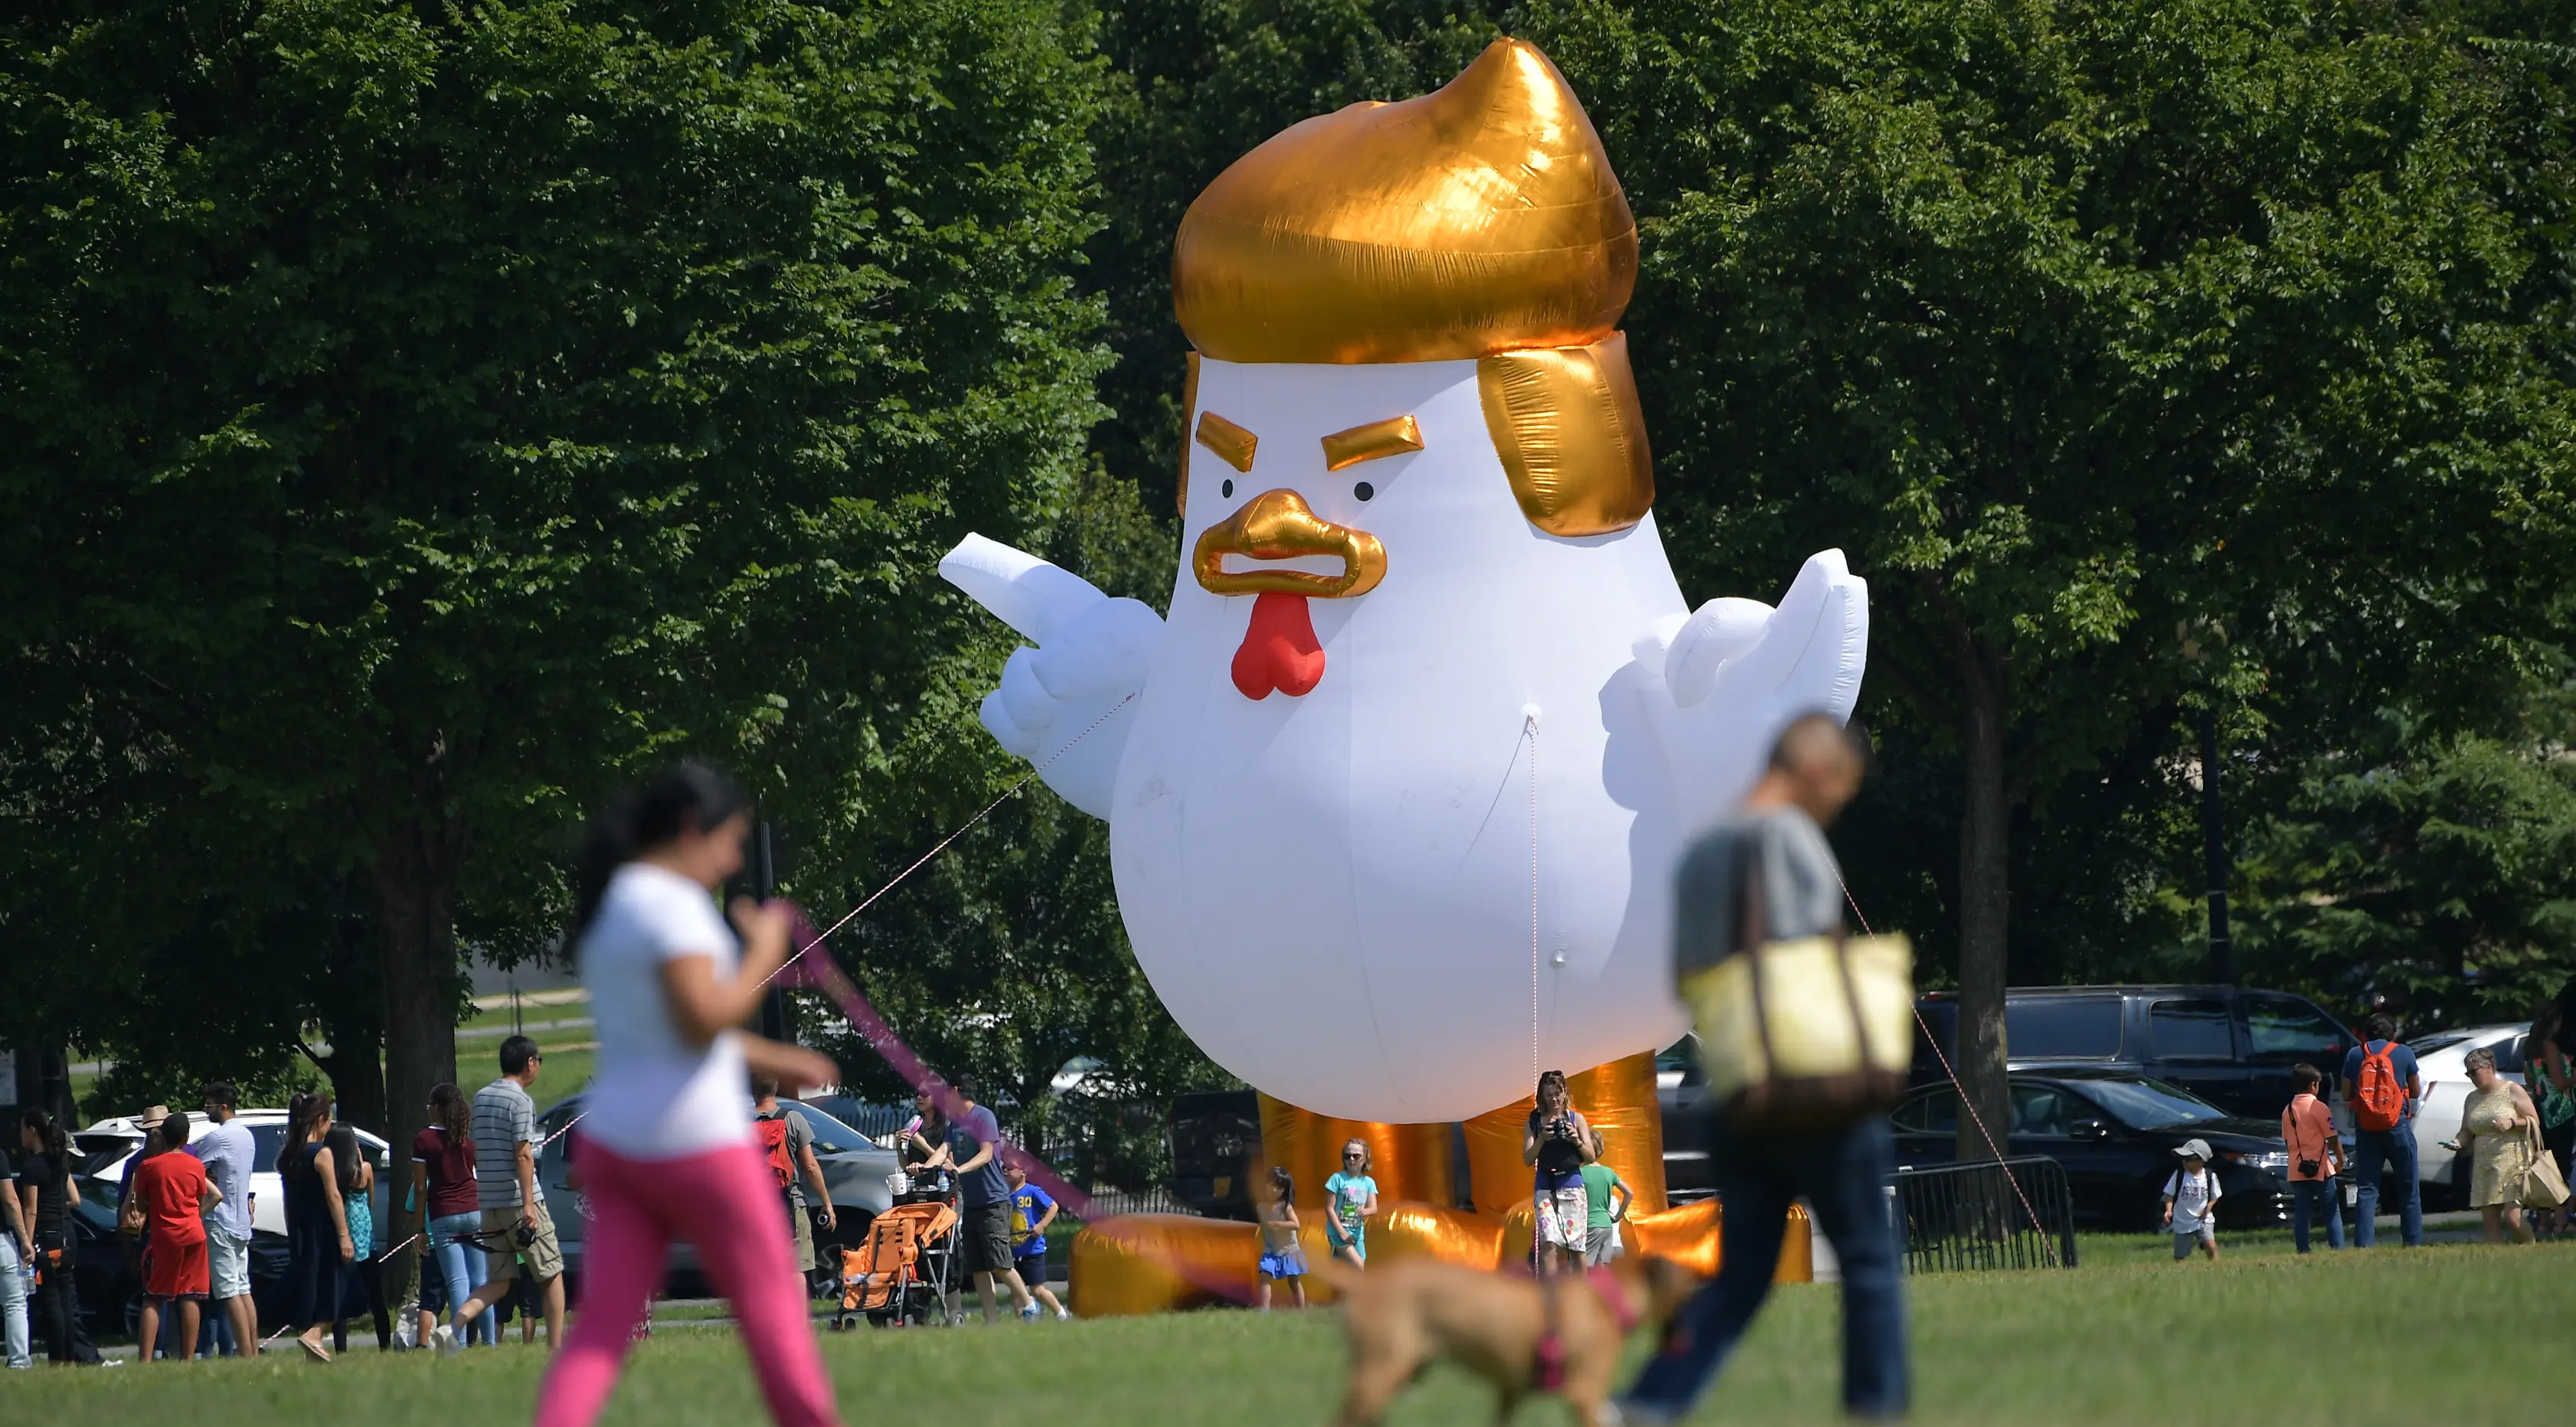 Wisatawan melewati balon raksasa berbentuk ayam dengan rambut seperti Donald Trump di sebuah taman di belakang Gedung Putih, 9 Agustus 2017. Pemandangan langka balon ayam raksasa berukuran 23 kaki itu dengan cepat menarik perhatian. (Mandel NGAN/AFP)